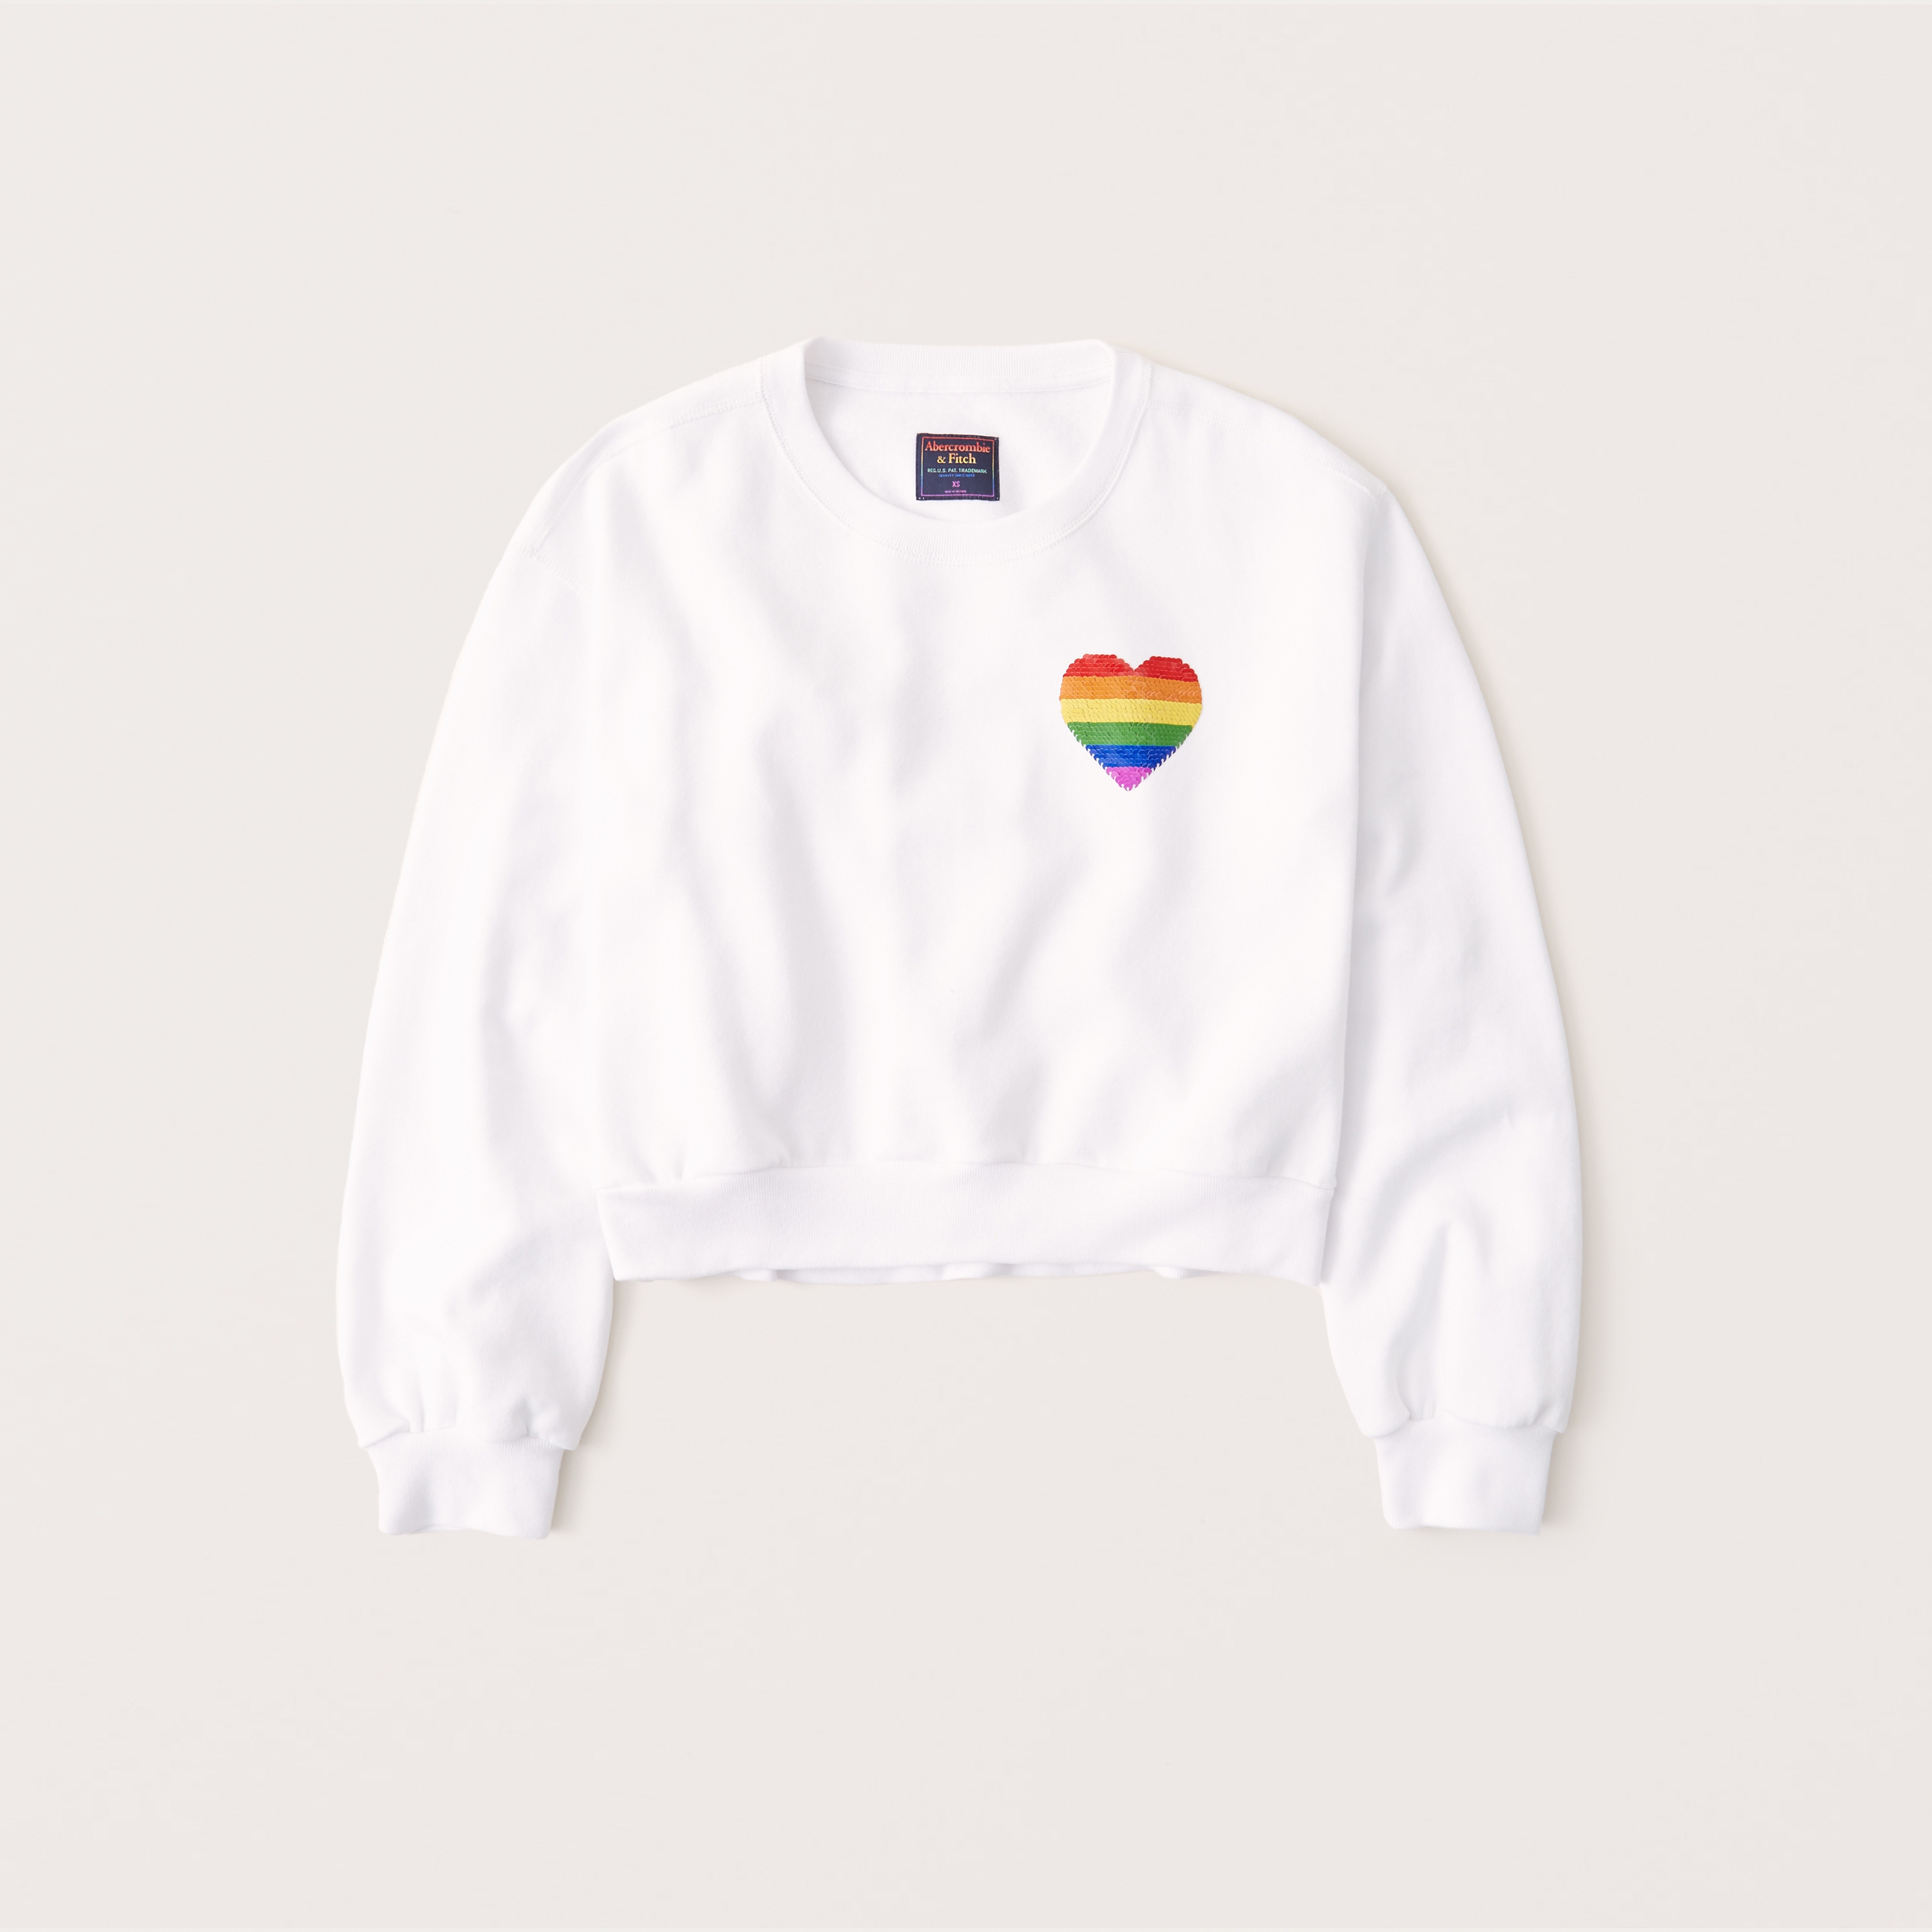 abercrombie heart pride shirt